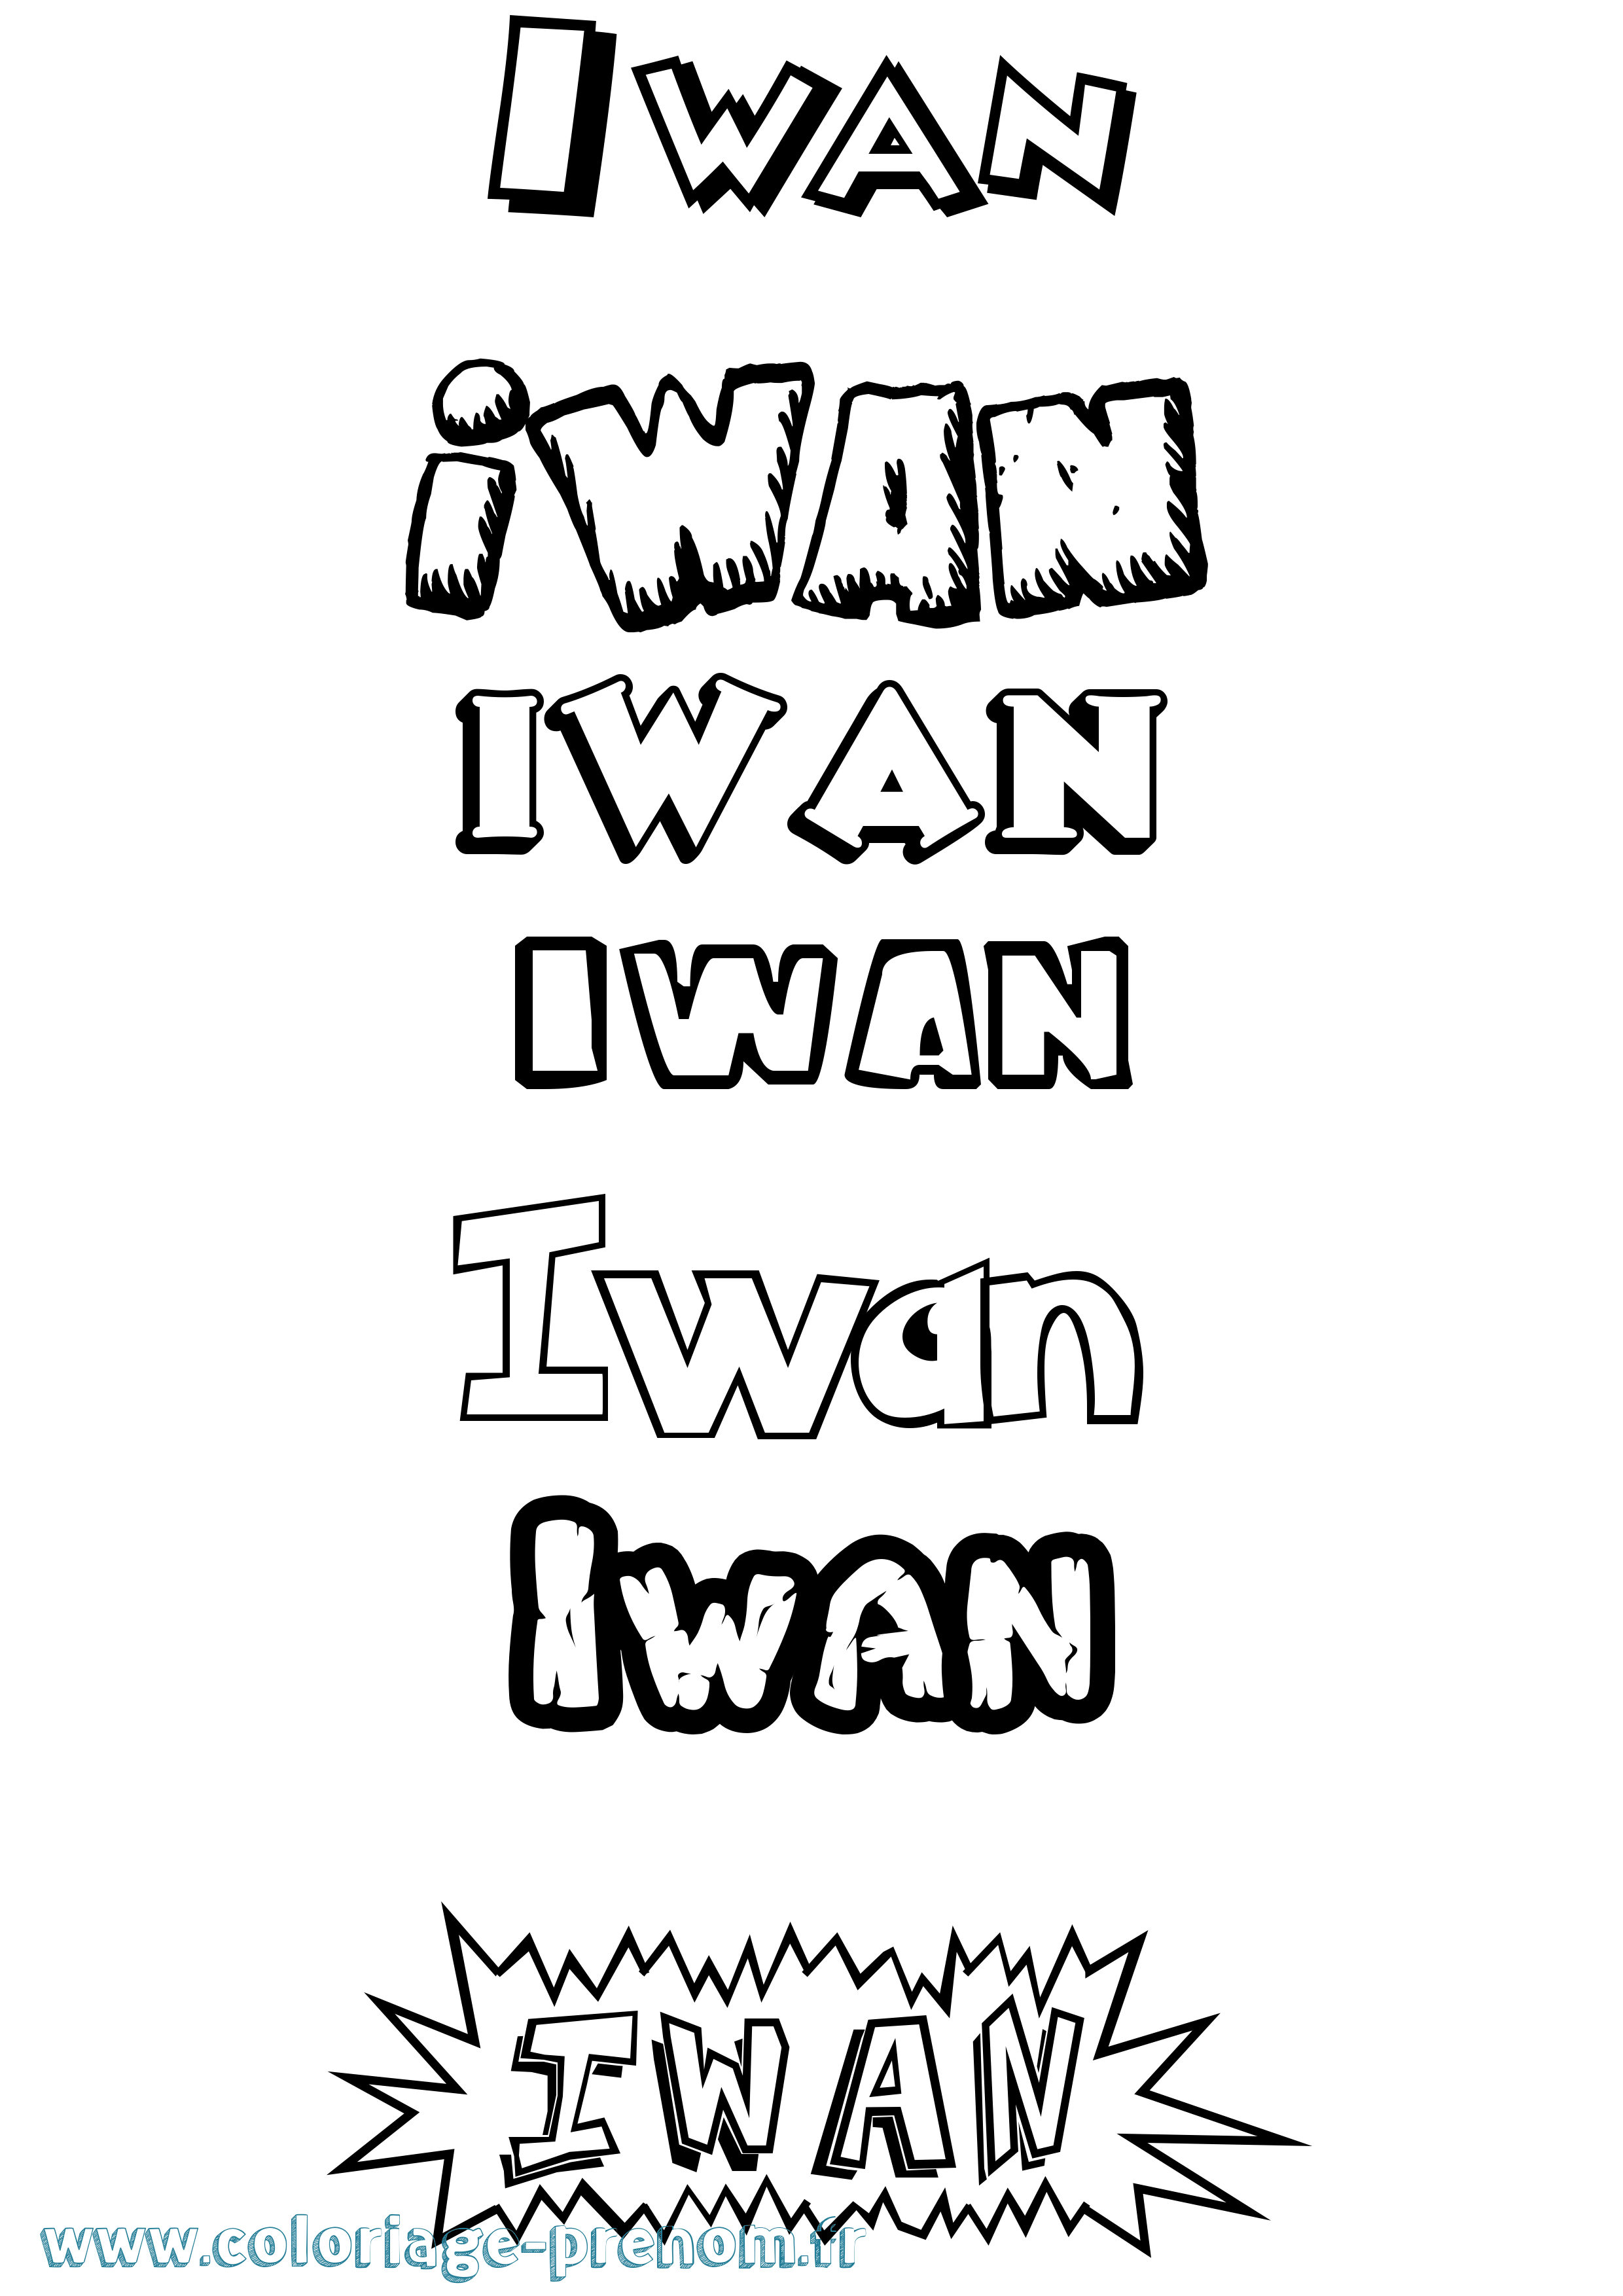 Coloriage prénom Iwan